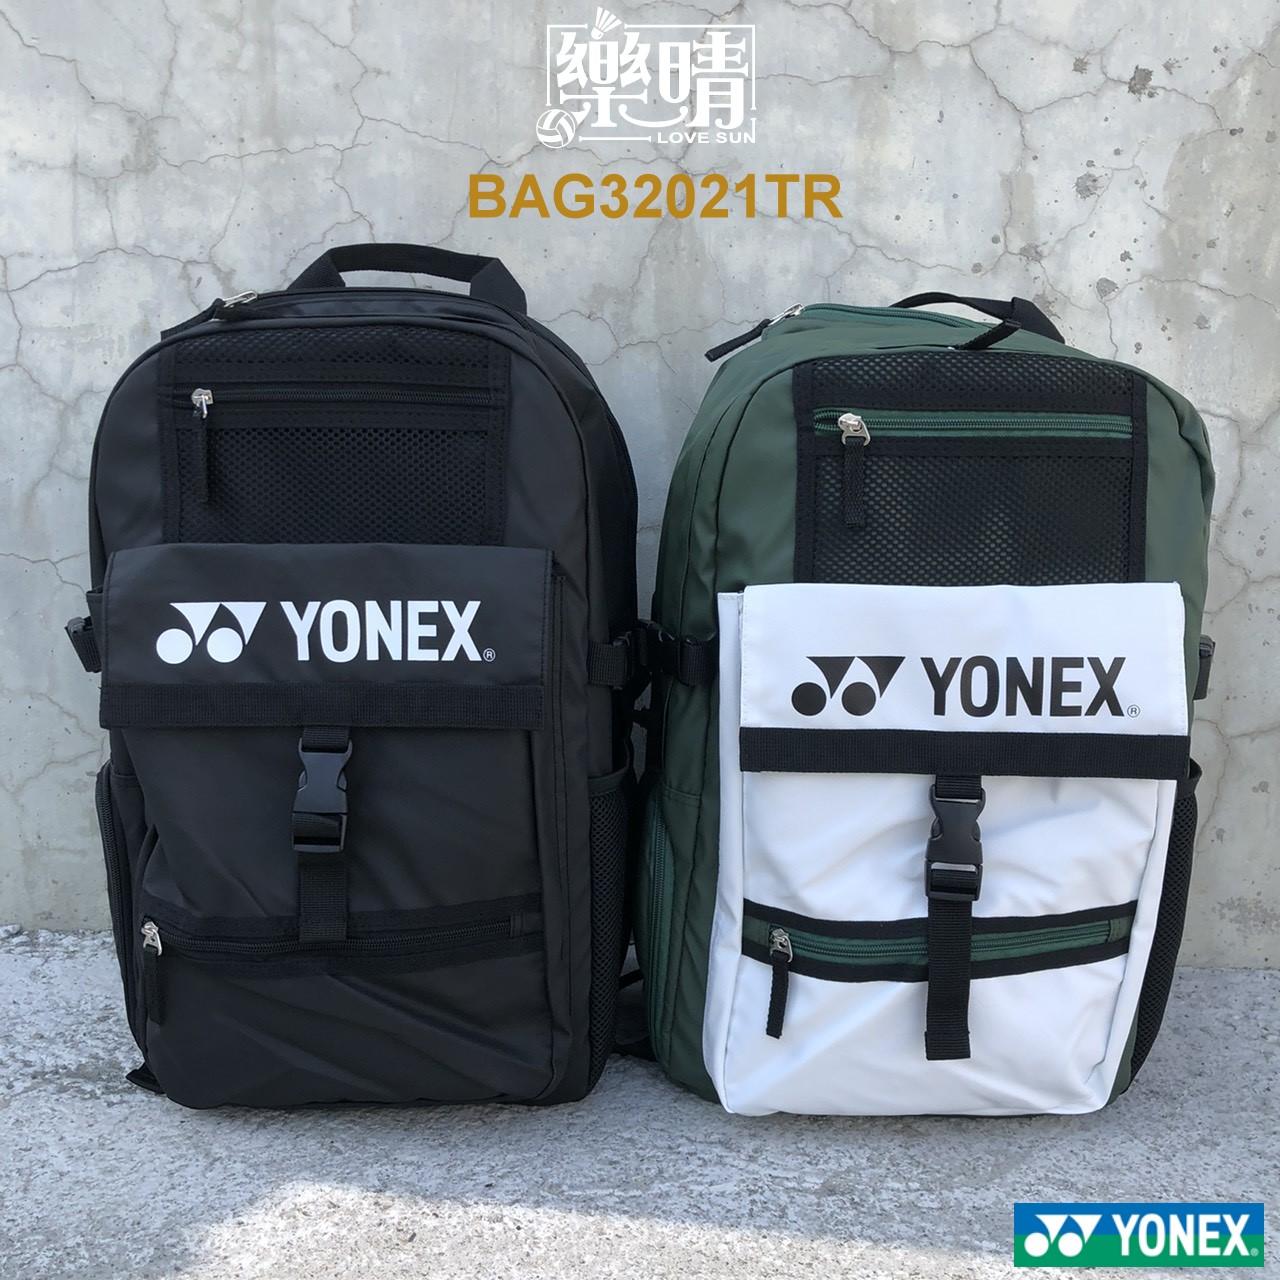 YONEX 後背包 BAG32021TR